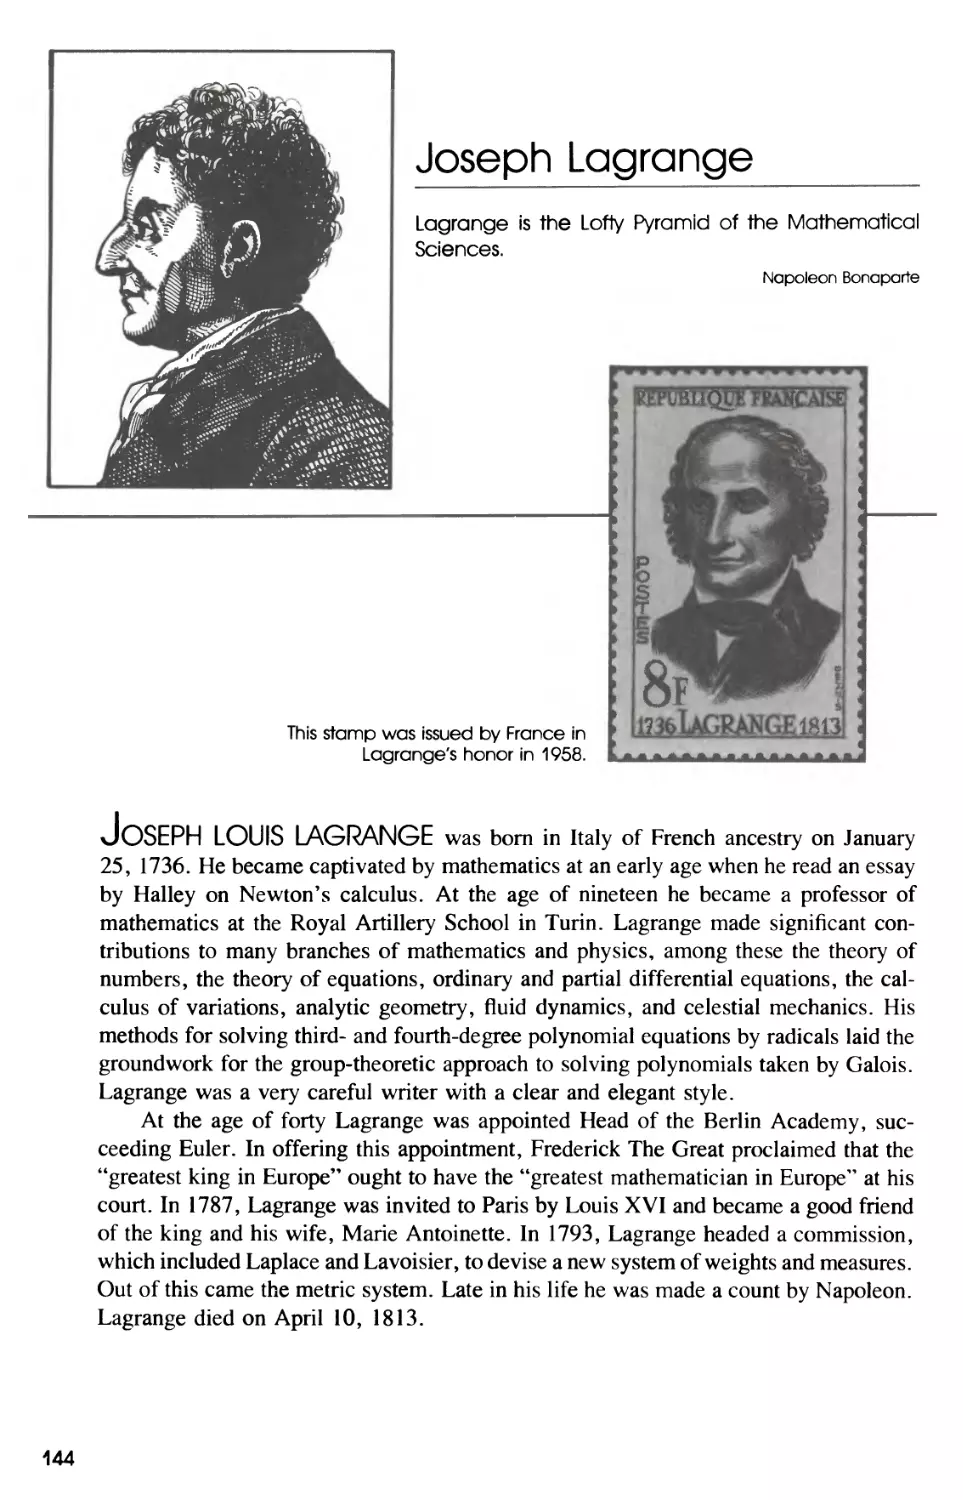 Biography of Joseph Lagrange